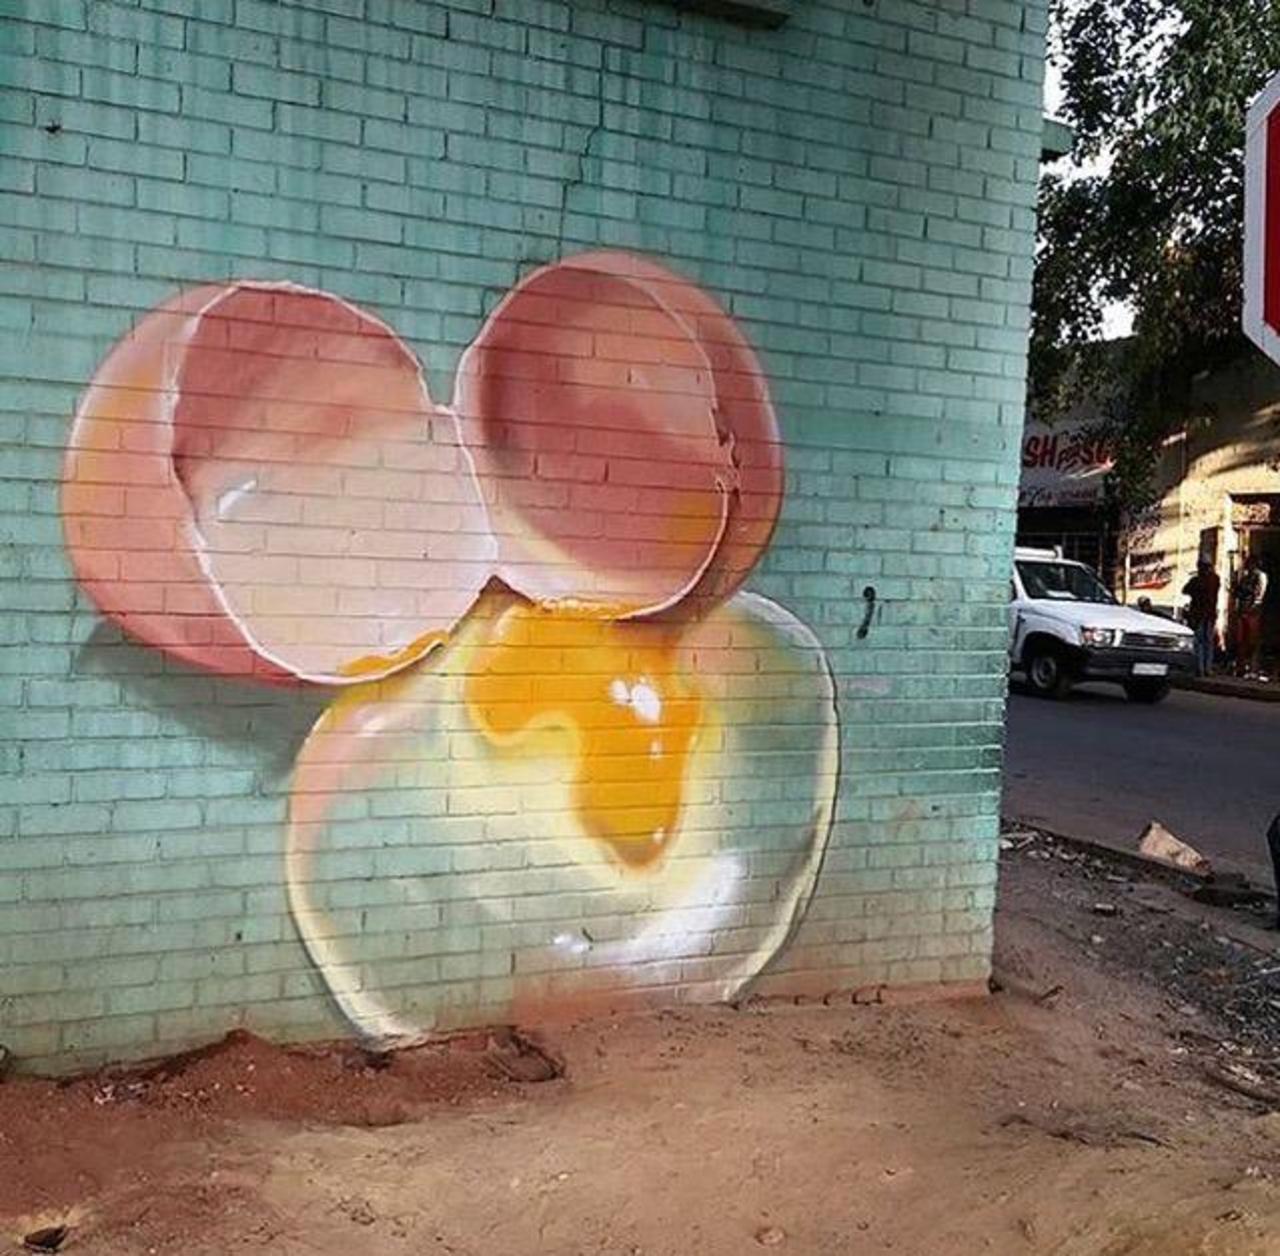 RT @GoogleStreetArt: Street Art by falco1 in Johannesburg SA  

#art #graffiti #mural #streetart http://t.co/DyA6Ndoqfy